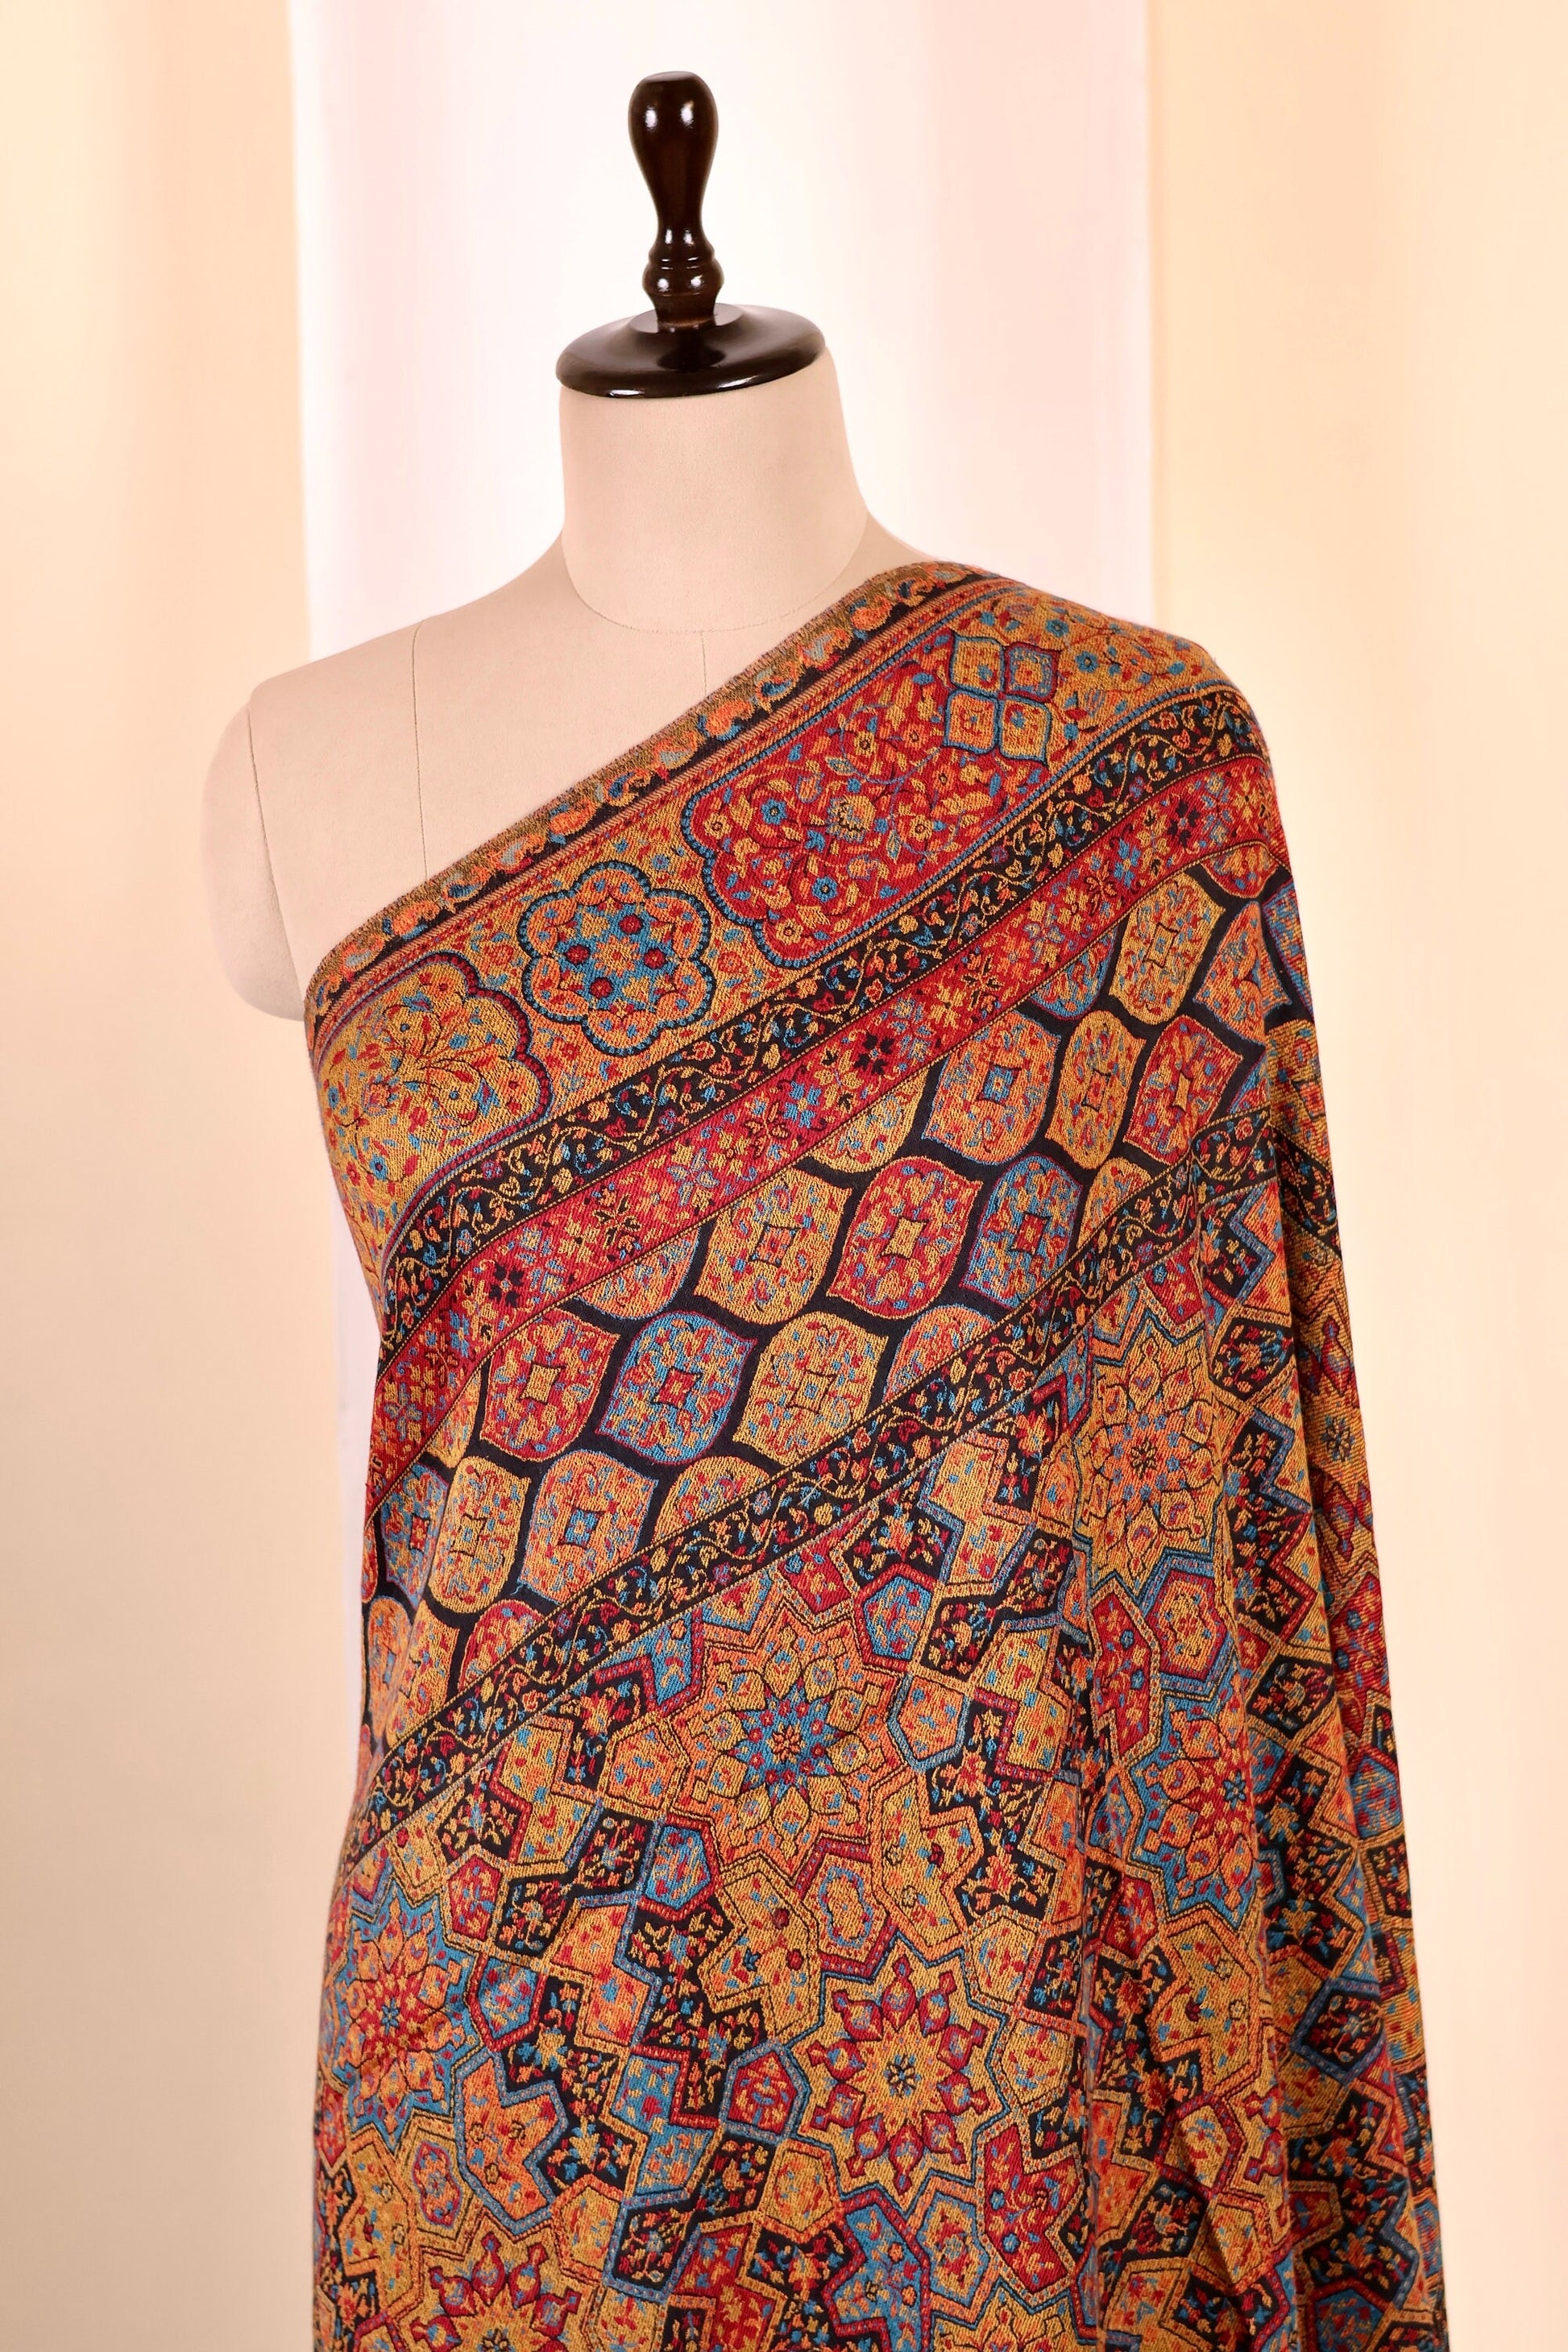 Pashmina Cashmere Shawl, Kalamkari Embroidery Kashmiri Pashmina Silk Shawl, Premium Cashmere Shawl, Soft & Warm Shawls, Christmas Gift